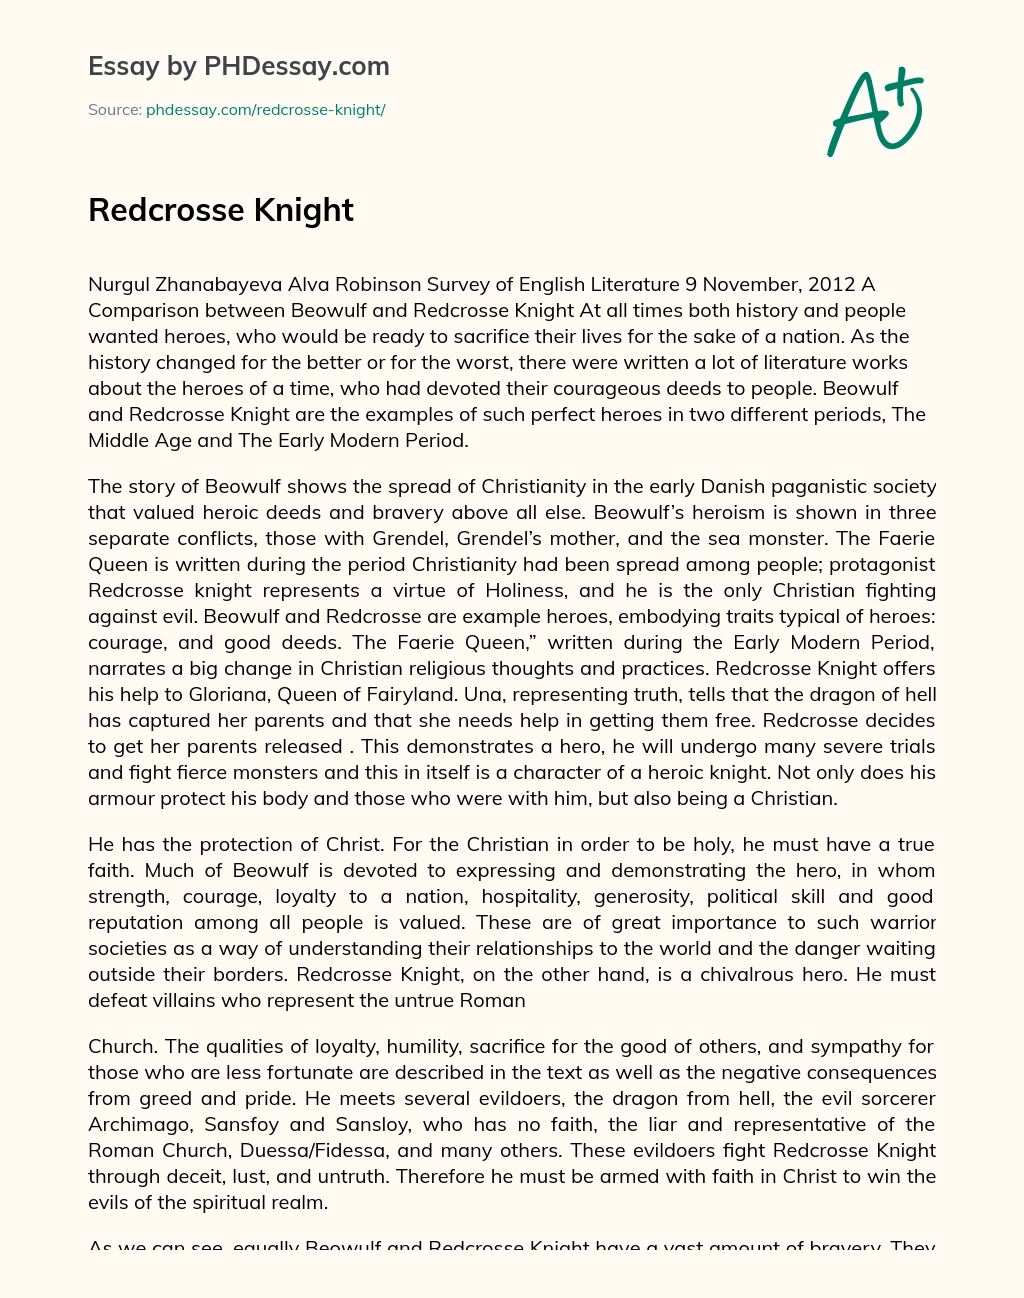 Redcrosse Knight essay